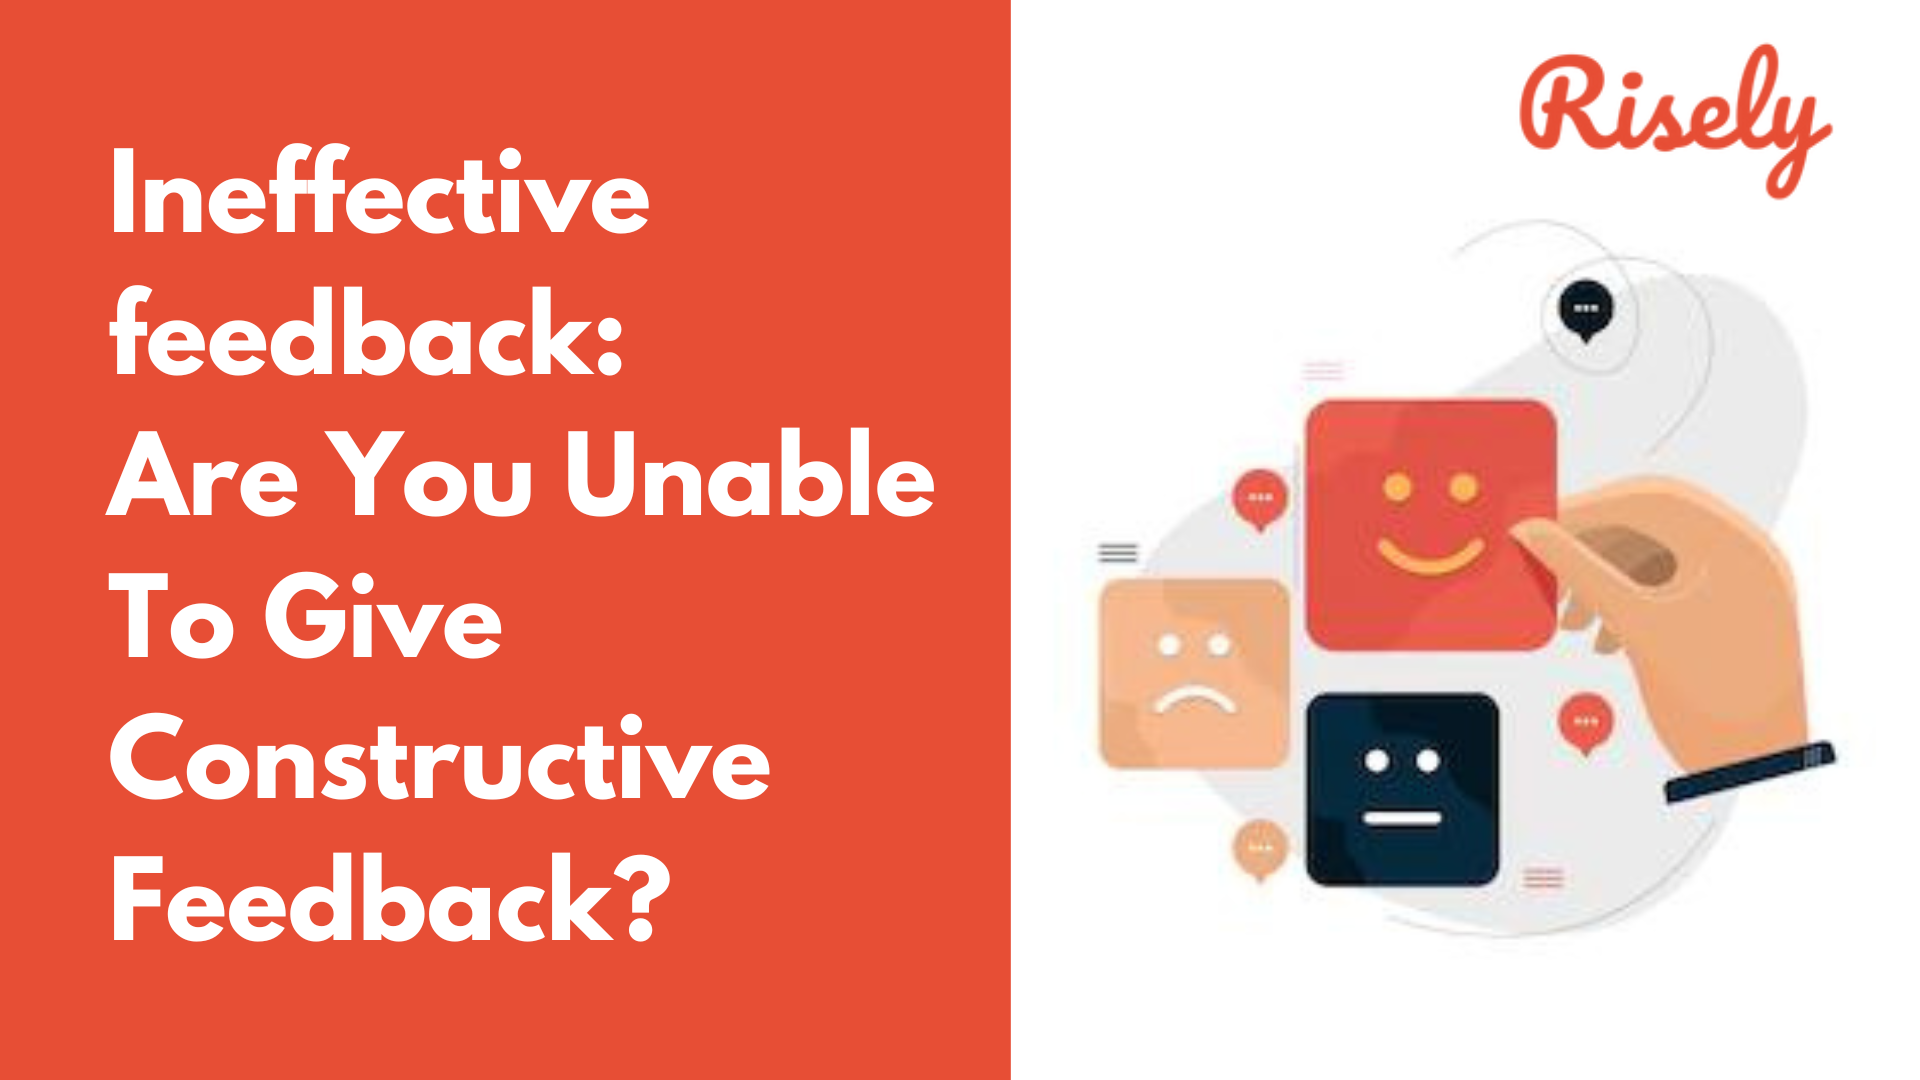 Give Constructive Feedback